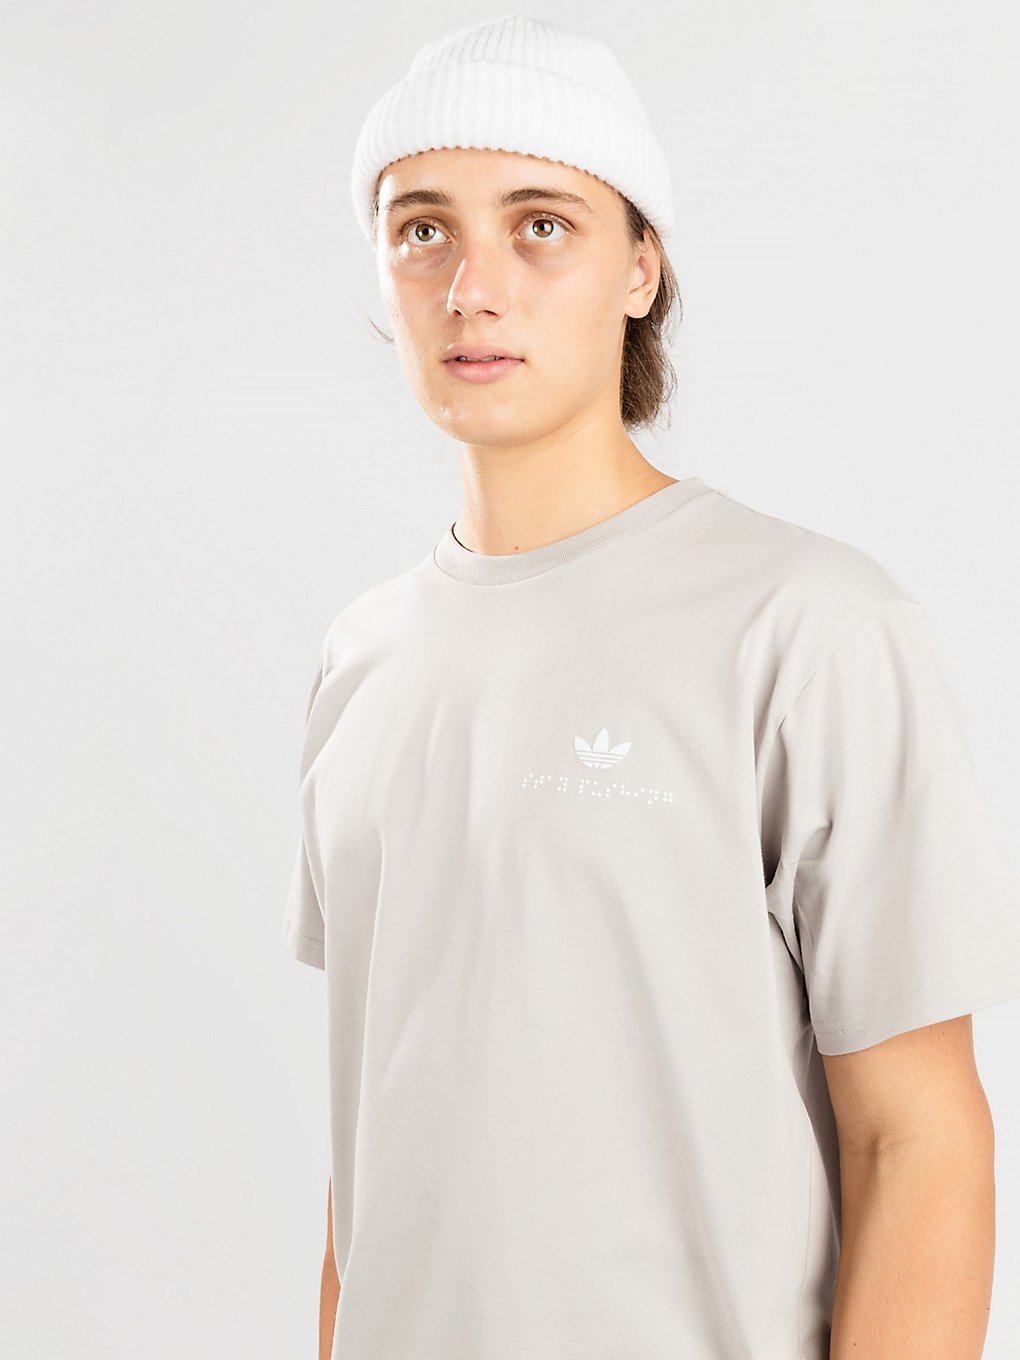 adidas Skateboarding Dan M T-Shirt multco kaufen